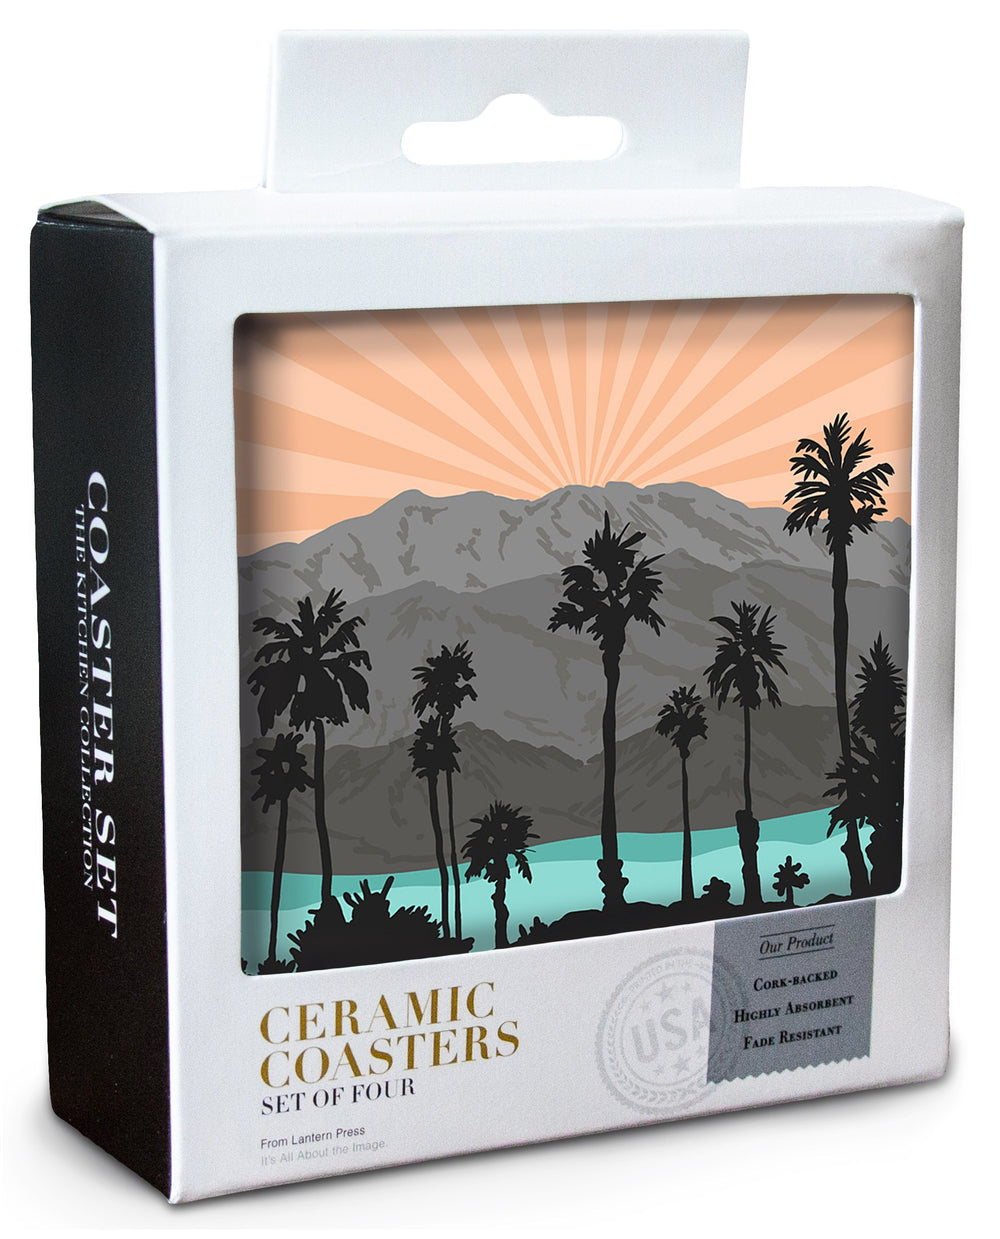 Santa Barbara, California, Palm Trees & Mountains, Lantern Press Artwork, Coaster Set Coasters Lantern Press 